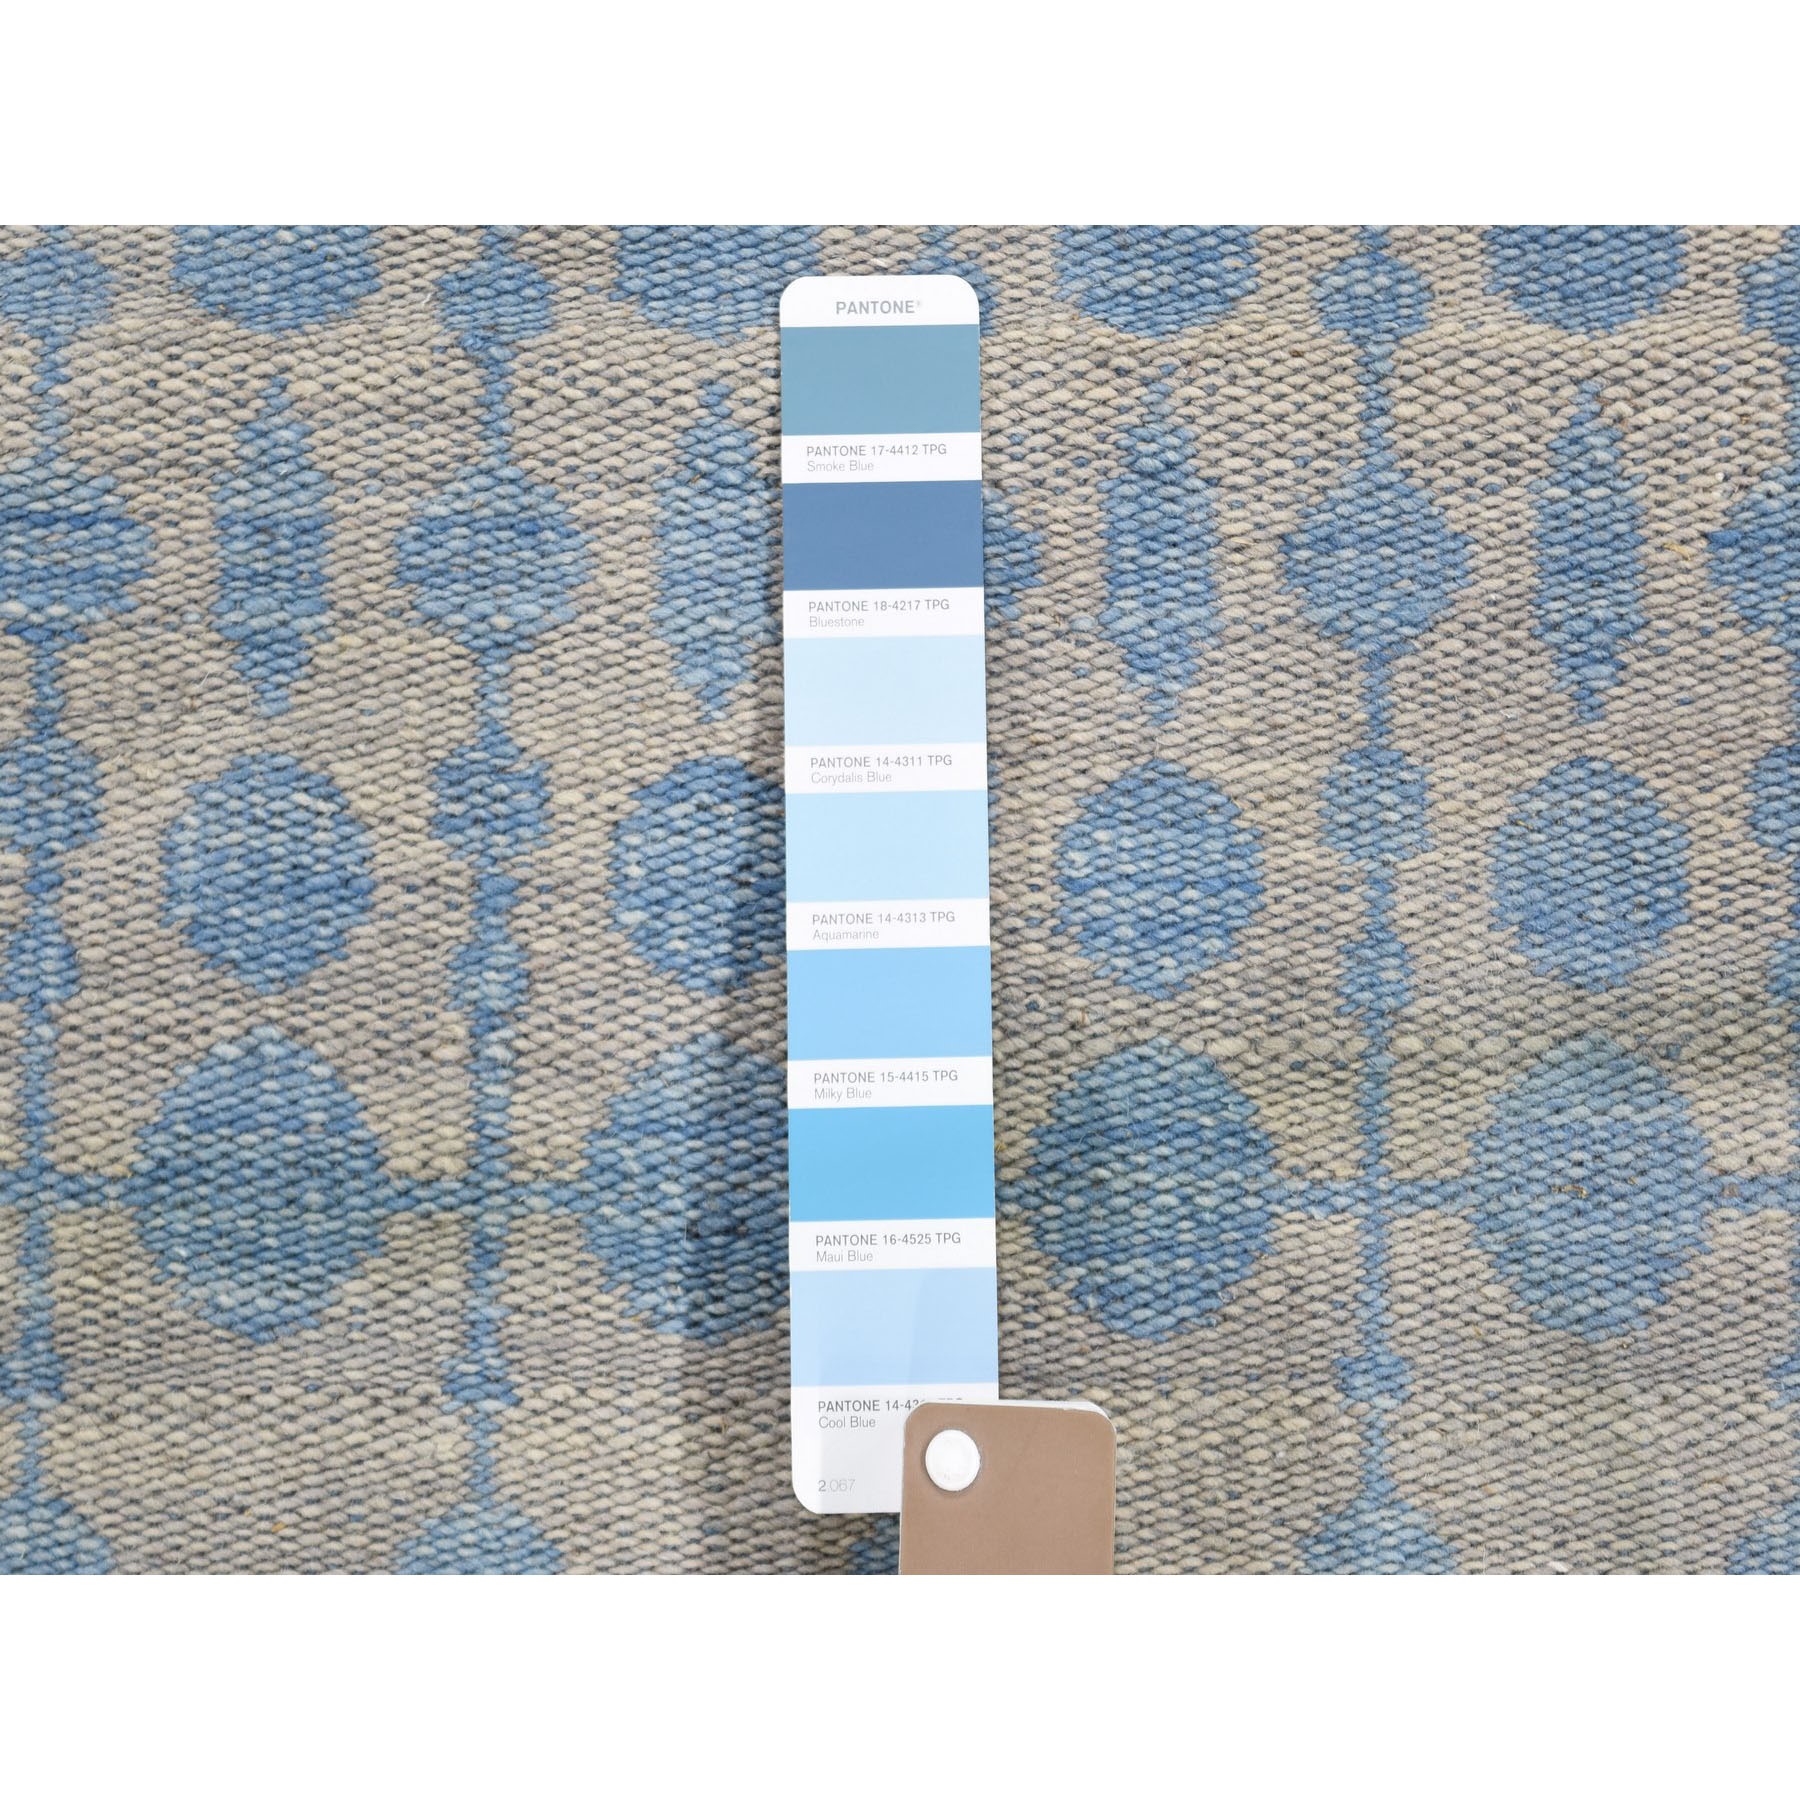 6-x6- Hand Woven Flat Weave Pure Wool Round Reversible Kilim Oriental Rug 